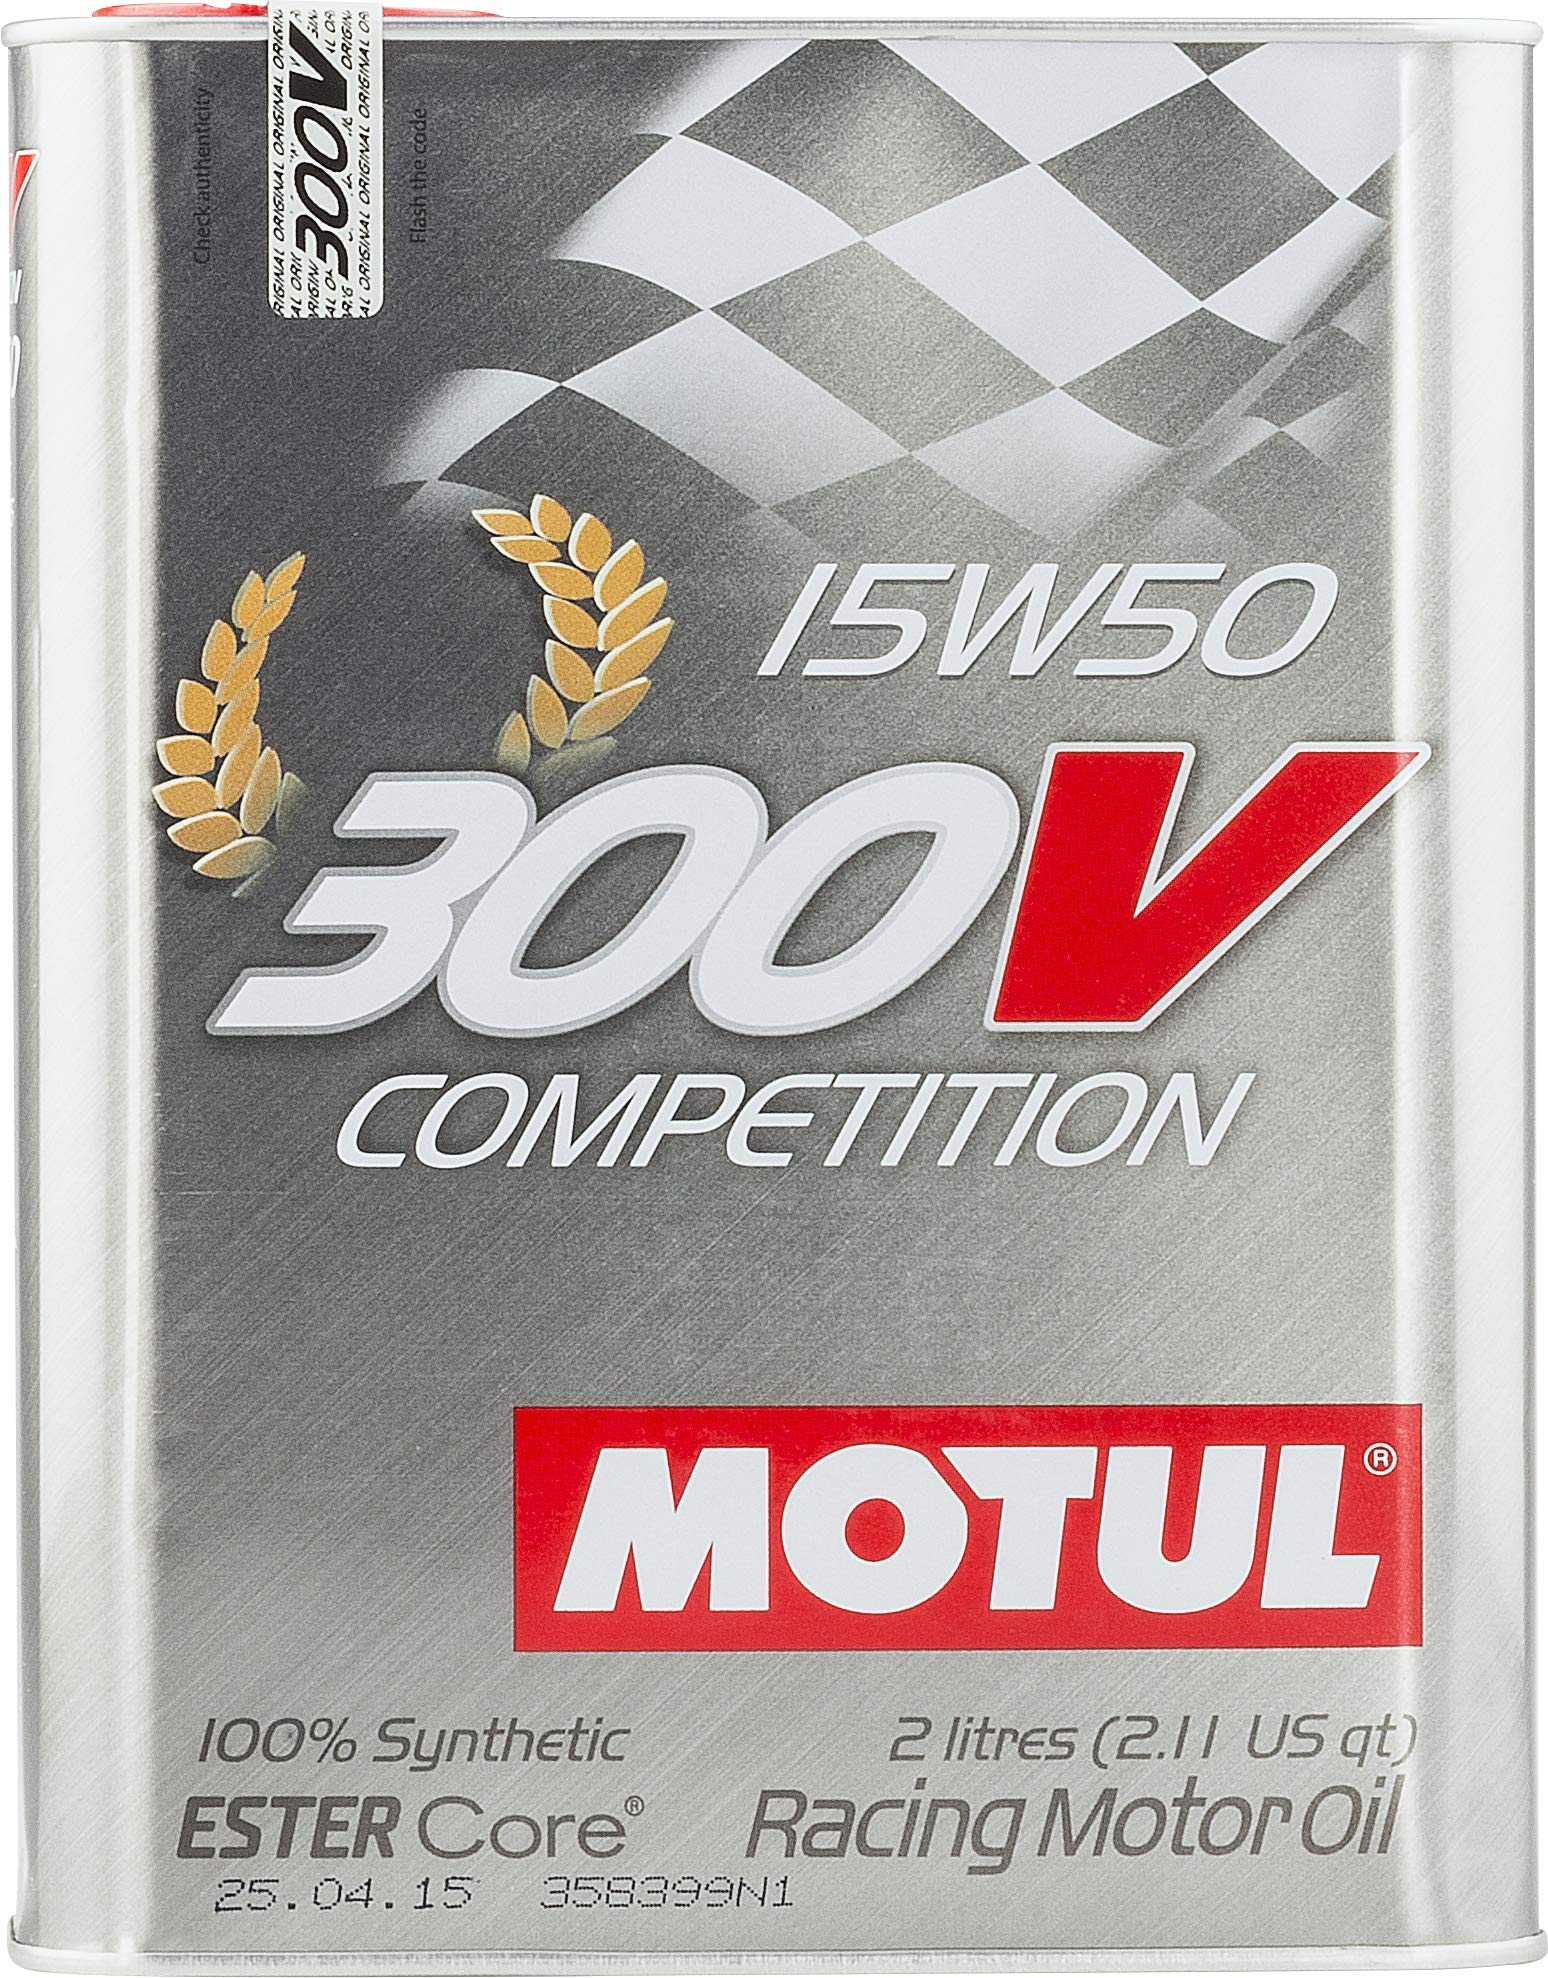 Motul 104244 Motoröl 300 V Competition 15W-50 2 L, Brown von Motul